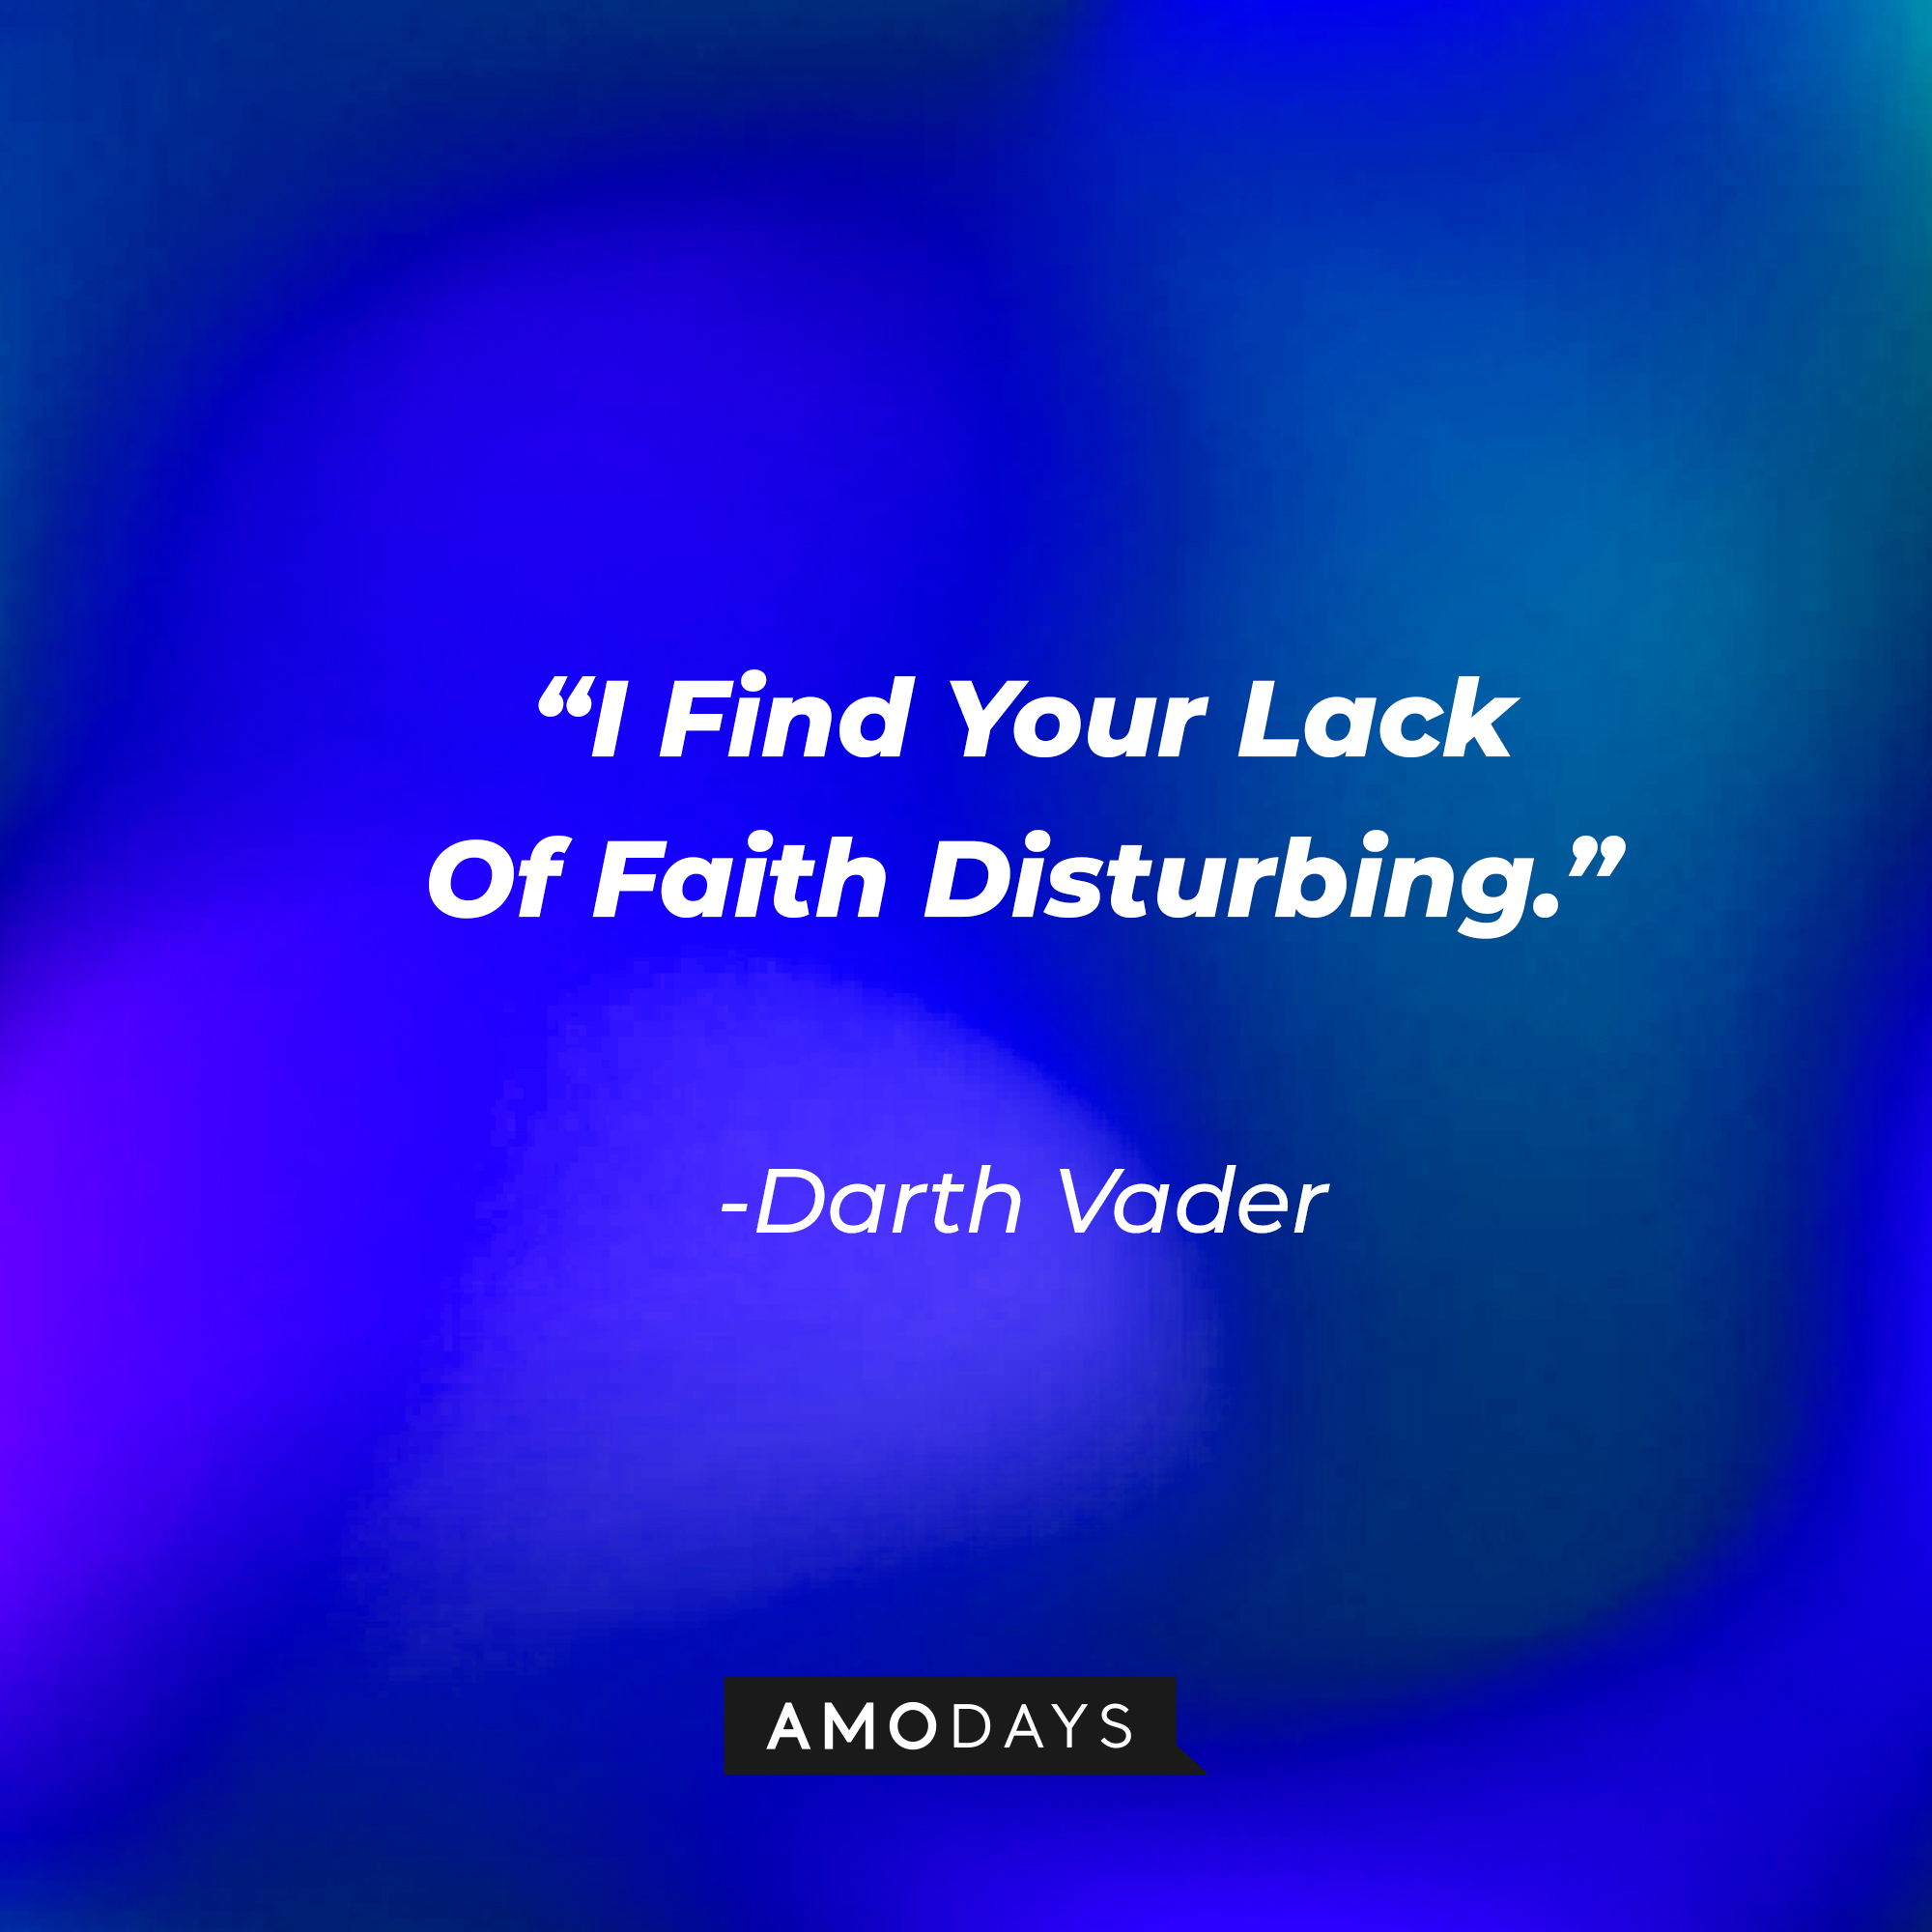 Darth Vader's quote: "I Find Your Lack Of Faith Disturbing." | Source: facebook.com/StarWars